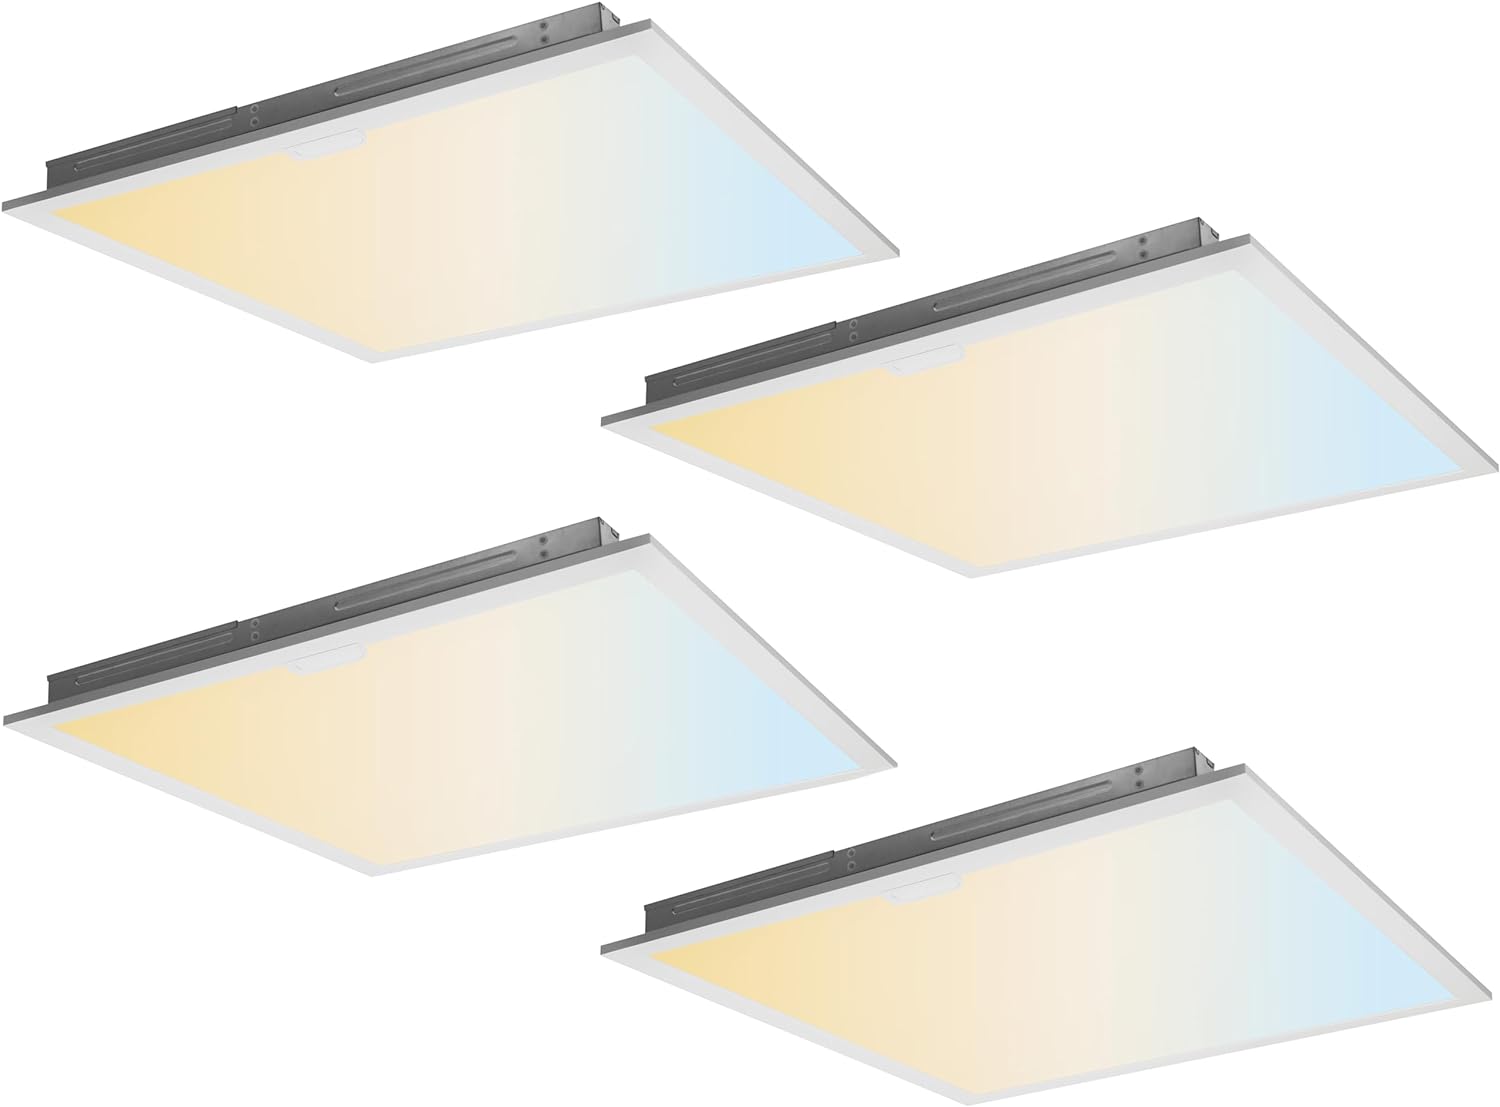 LED Ceiling Panel Light, 40W, 2x2, 4400 Lumens